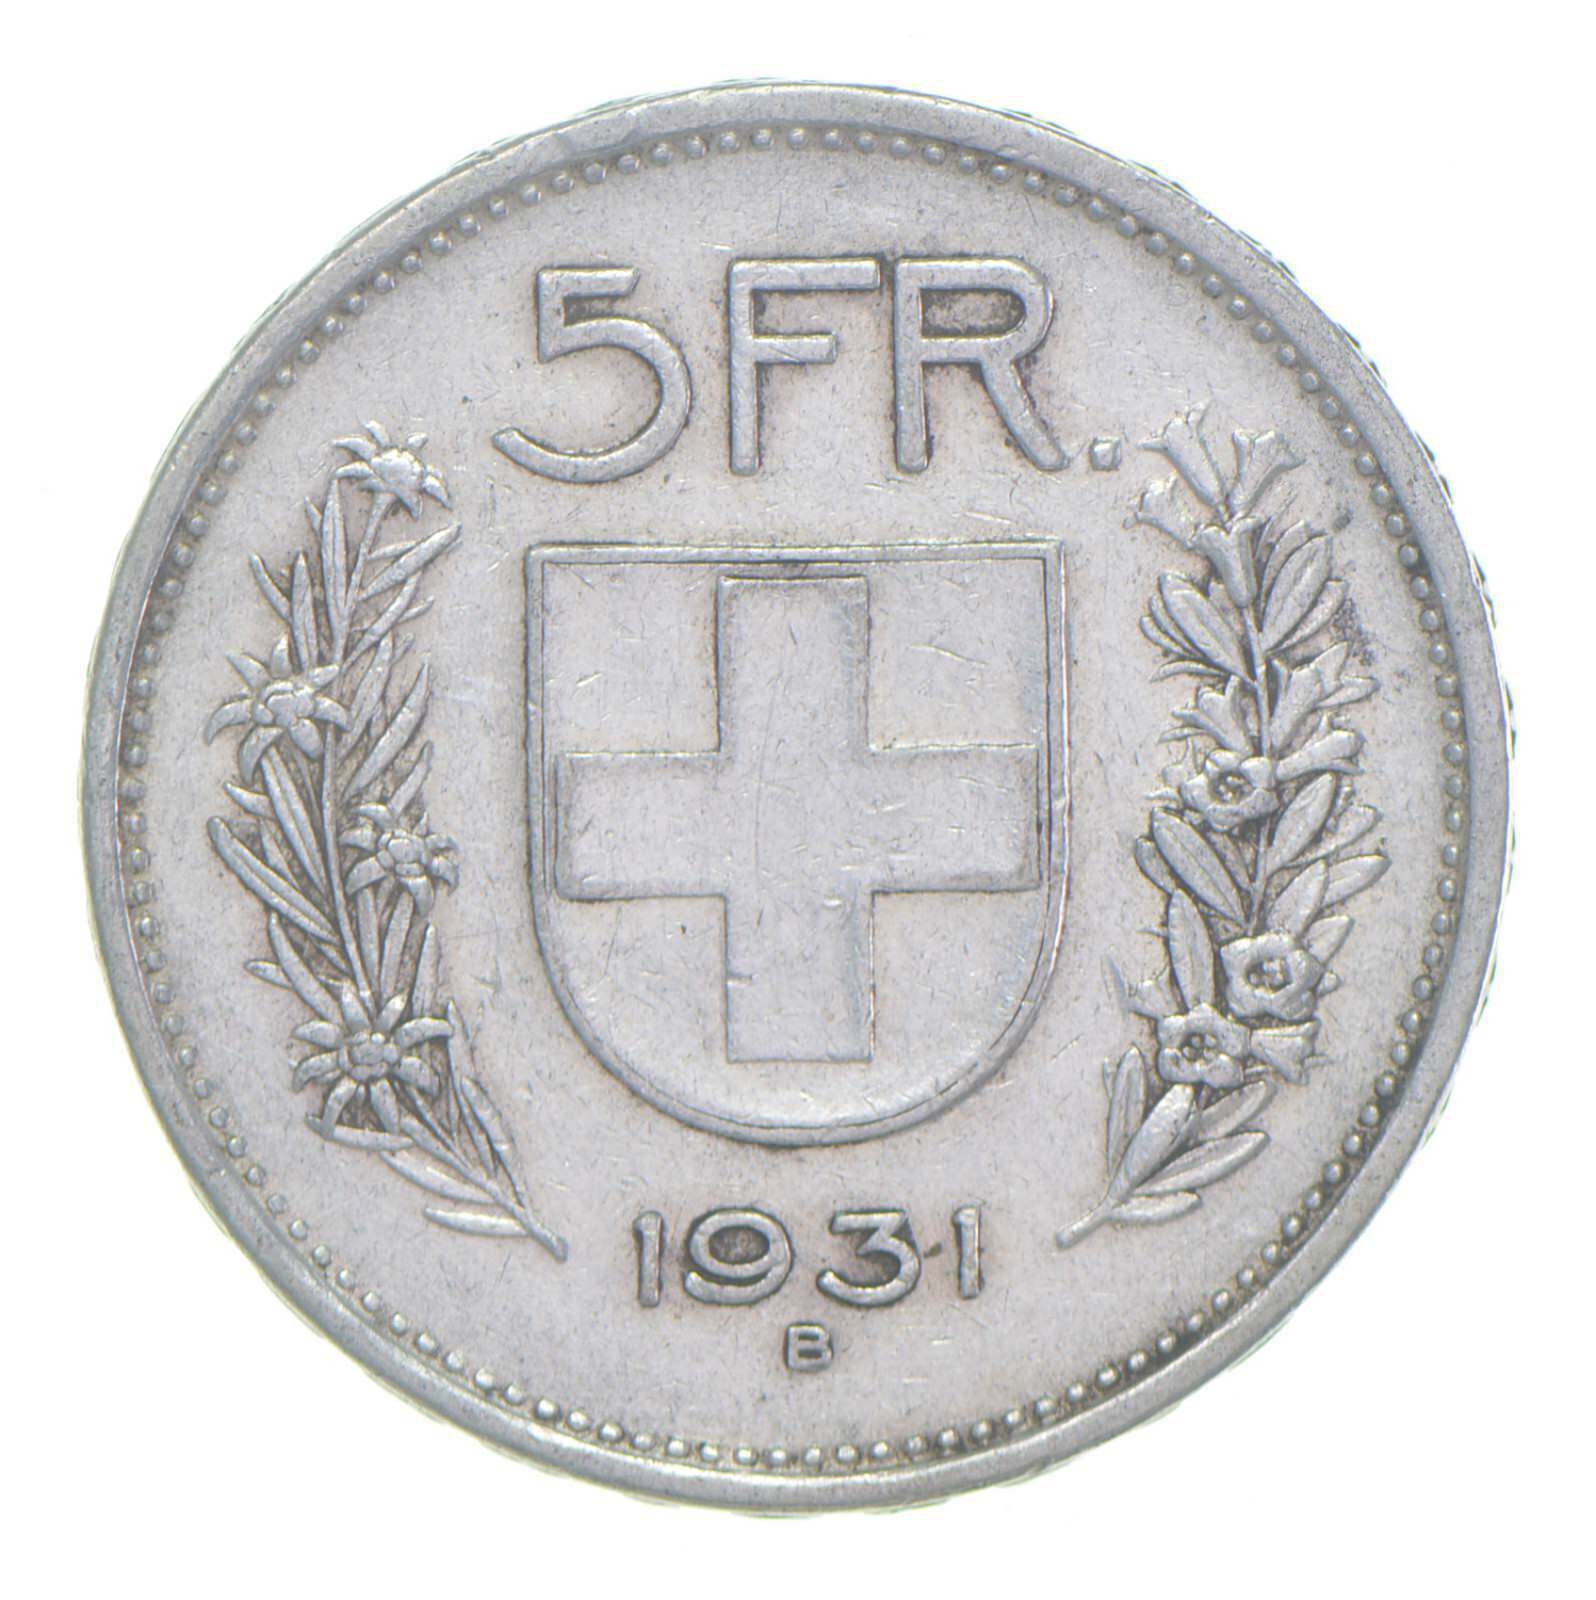 SILVER - WORLD Coin - 1931 Switzerland 5 Francs - World Silver C